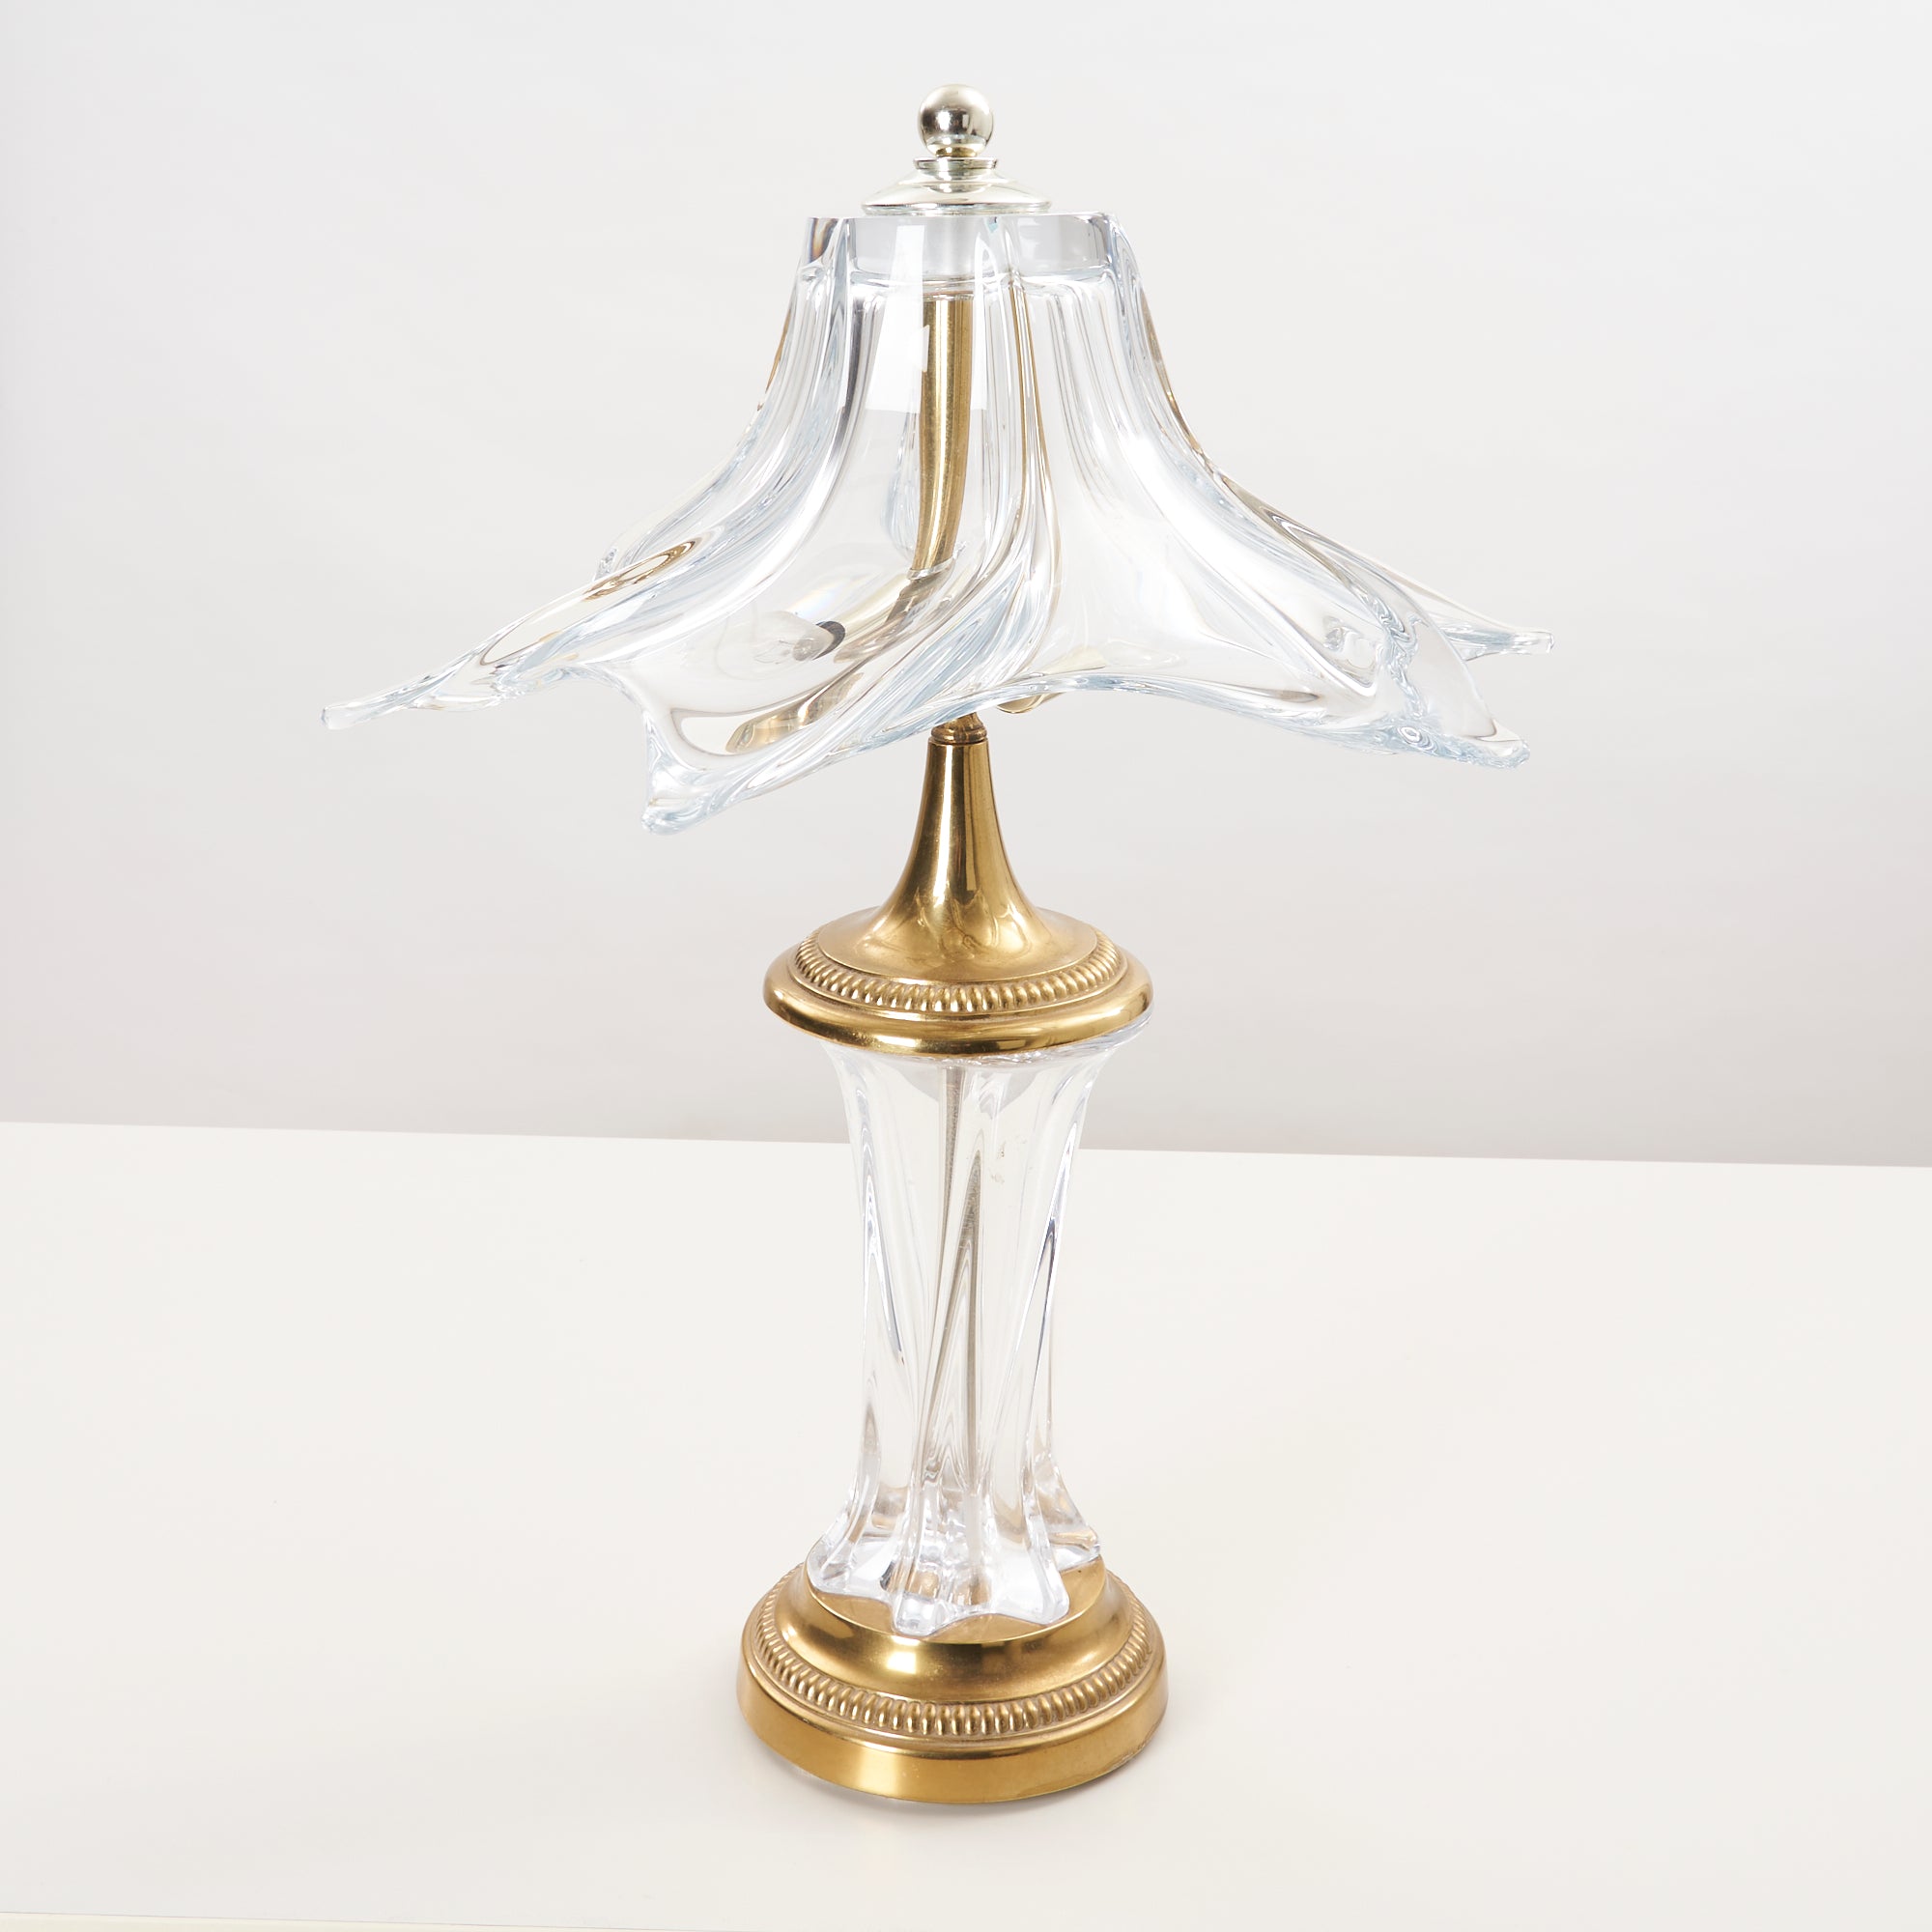 Confrac Art Verrier France Hand Blown Crystal Table Lamp